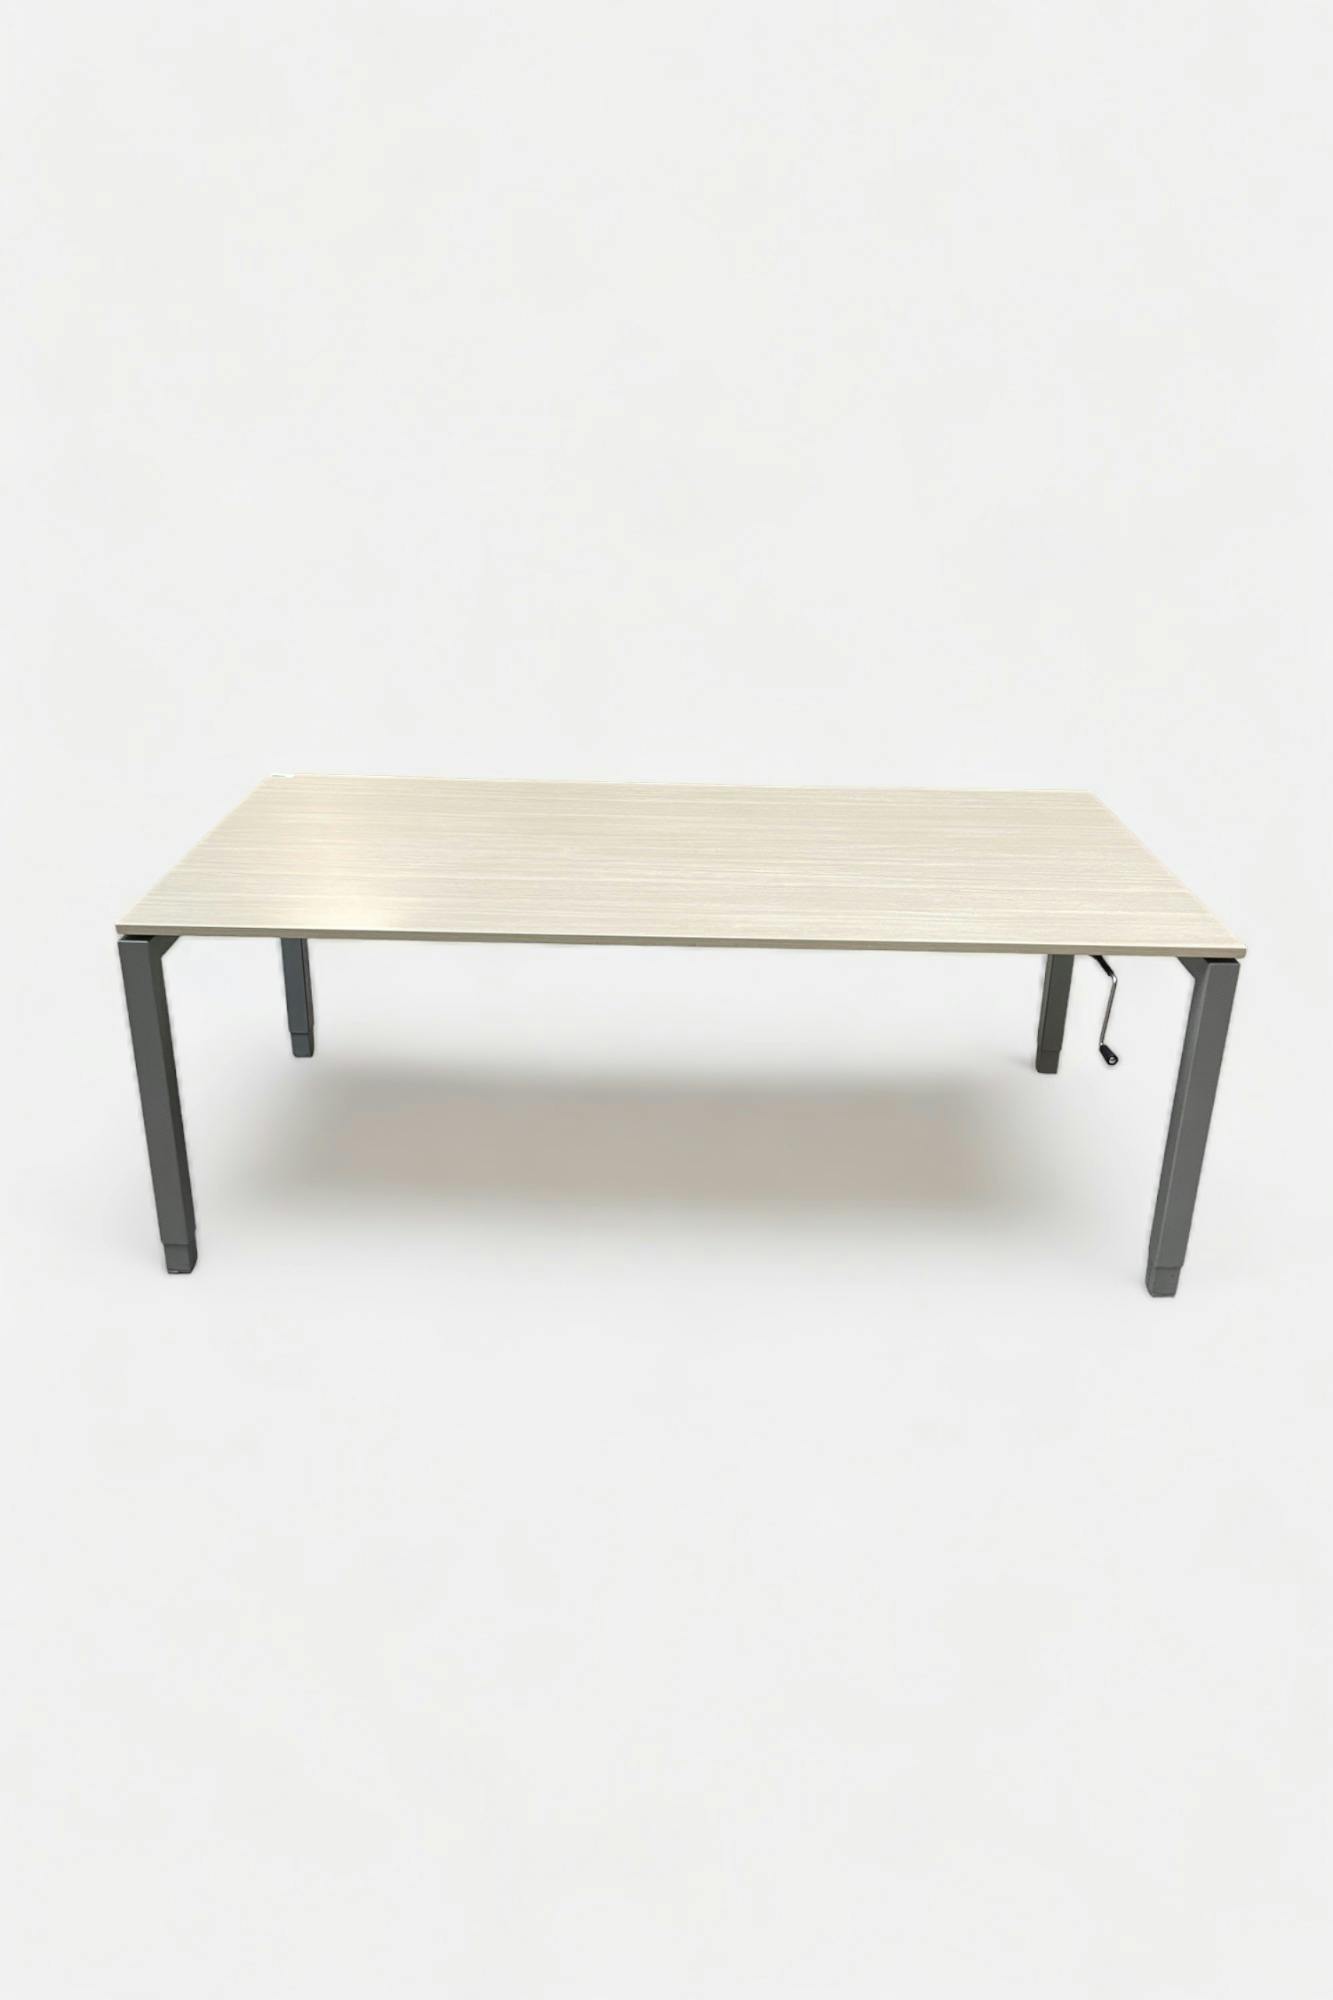 Nurus Wood Print Desks with metallic legs adjustable height - Second hand quality "Desks" - Relieve Furniture